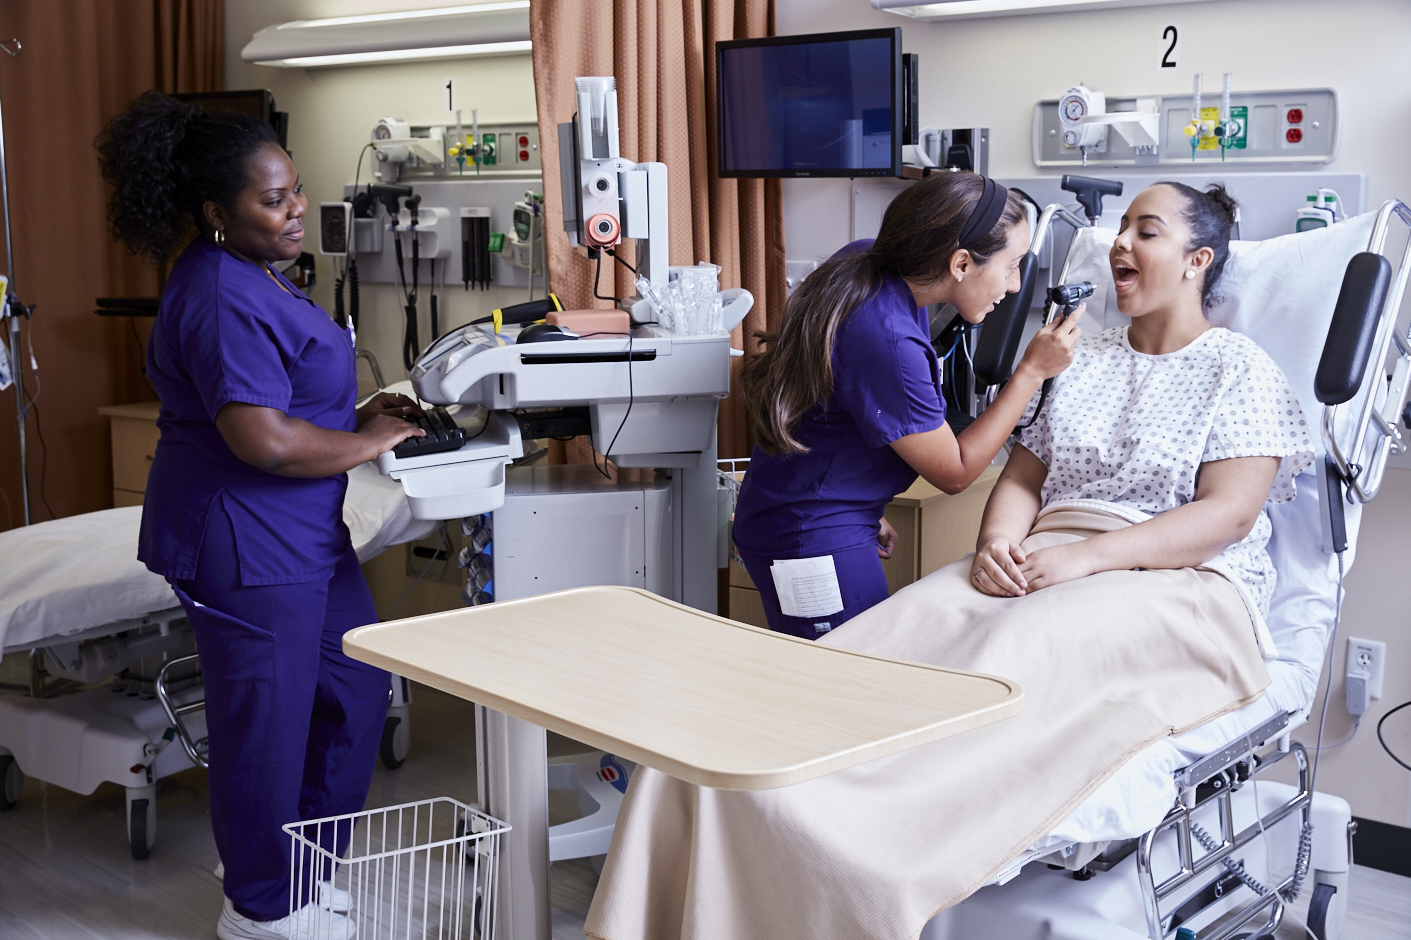 Nursing student in the simulation center examining mock patient